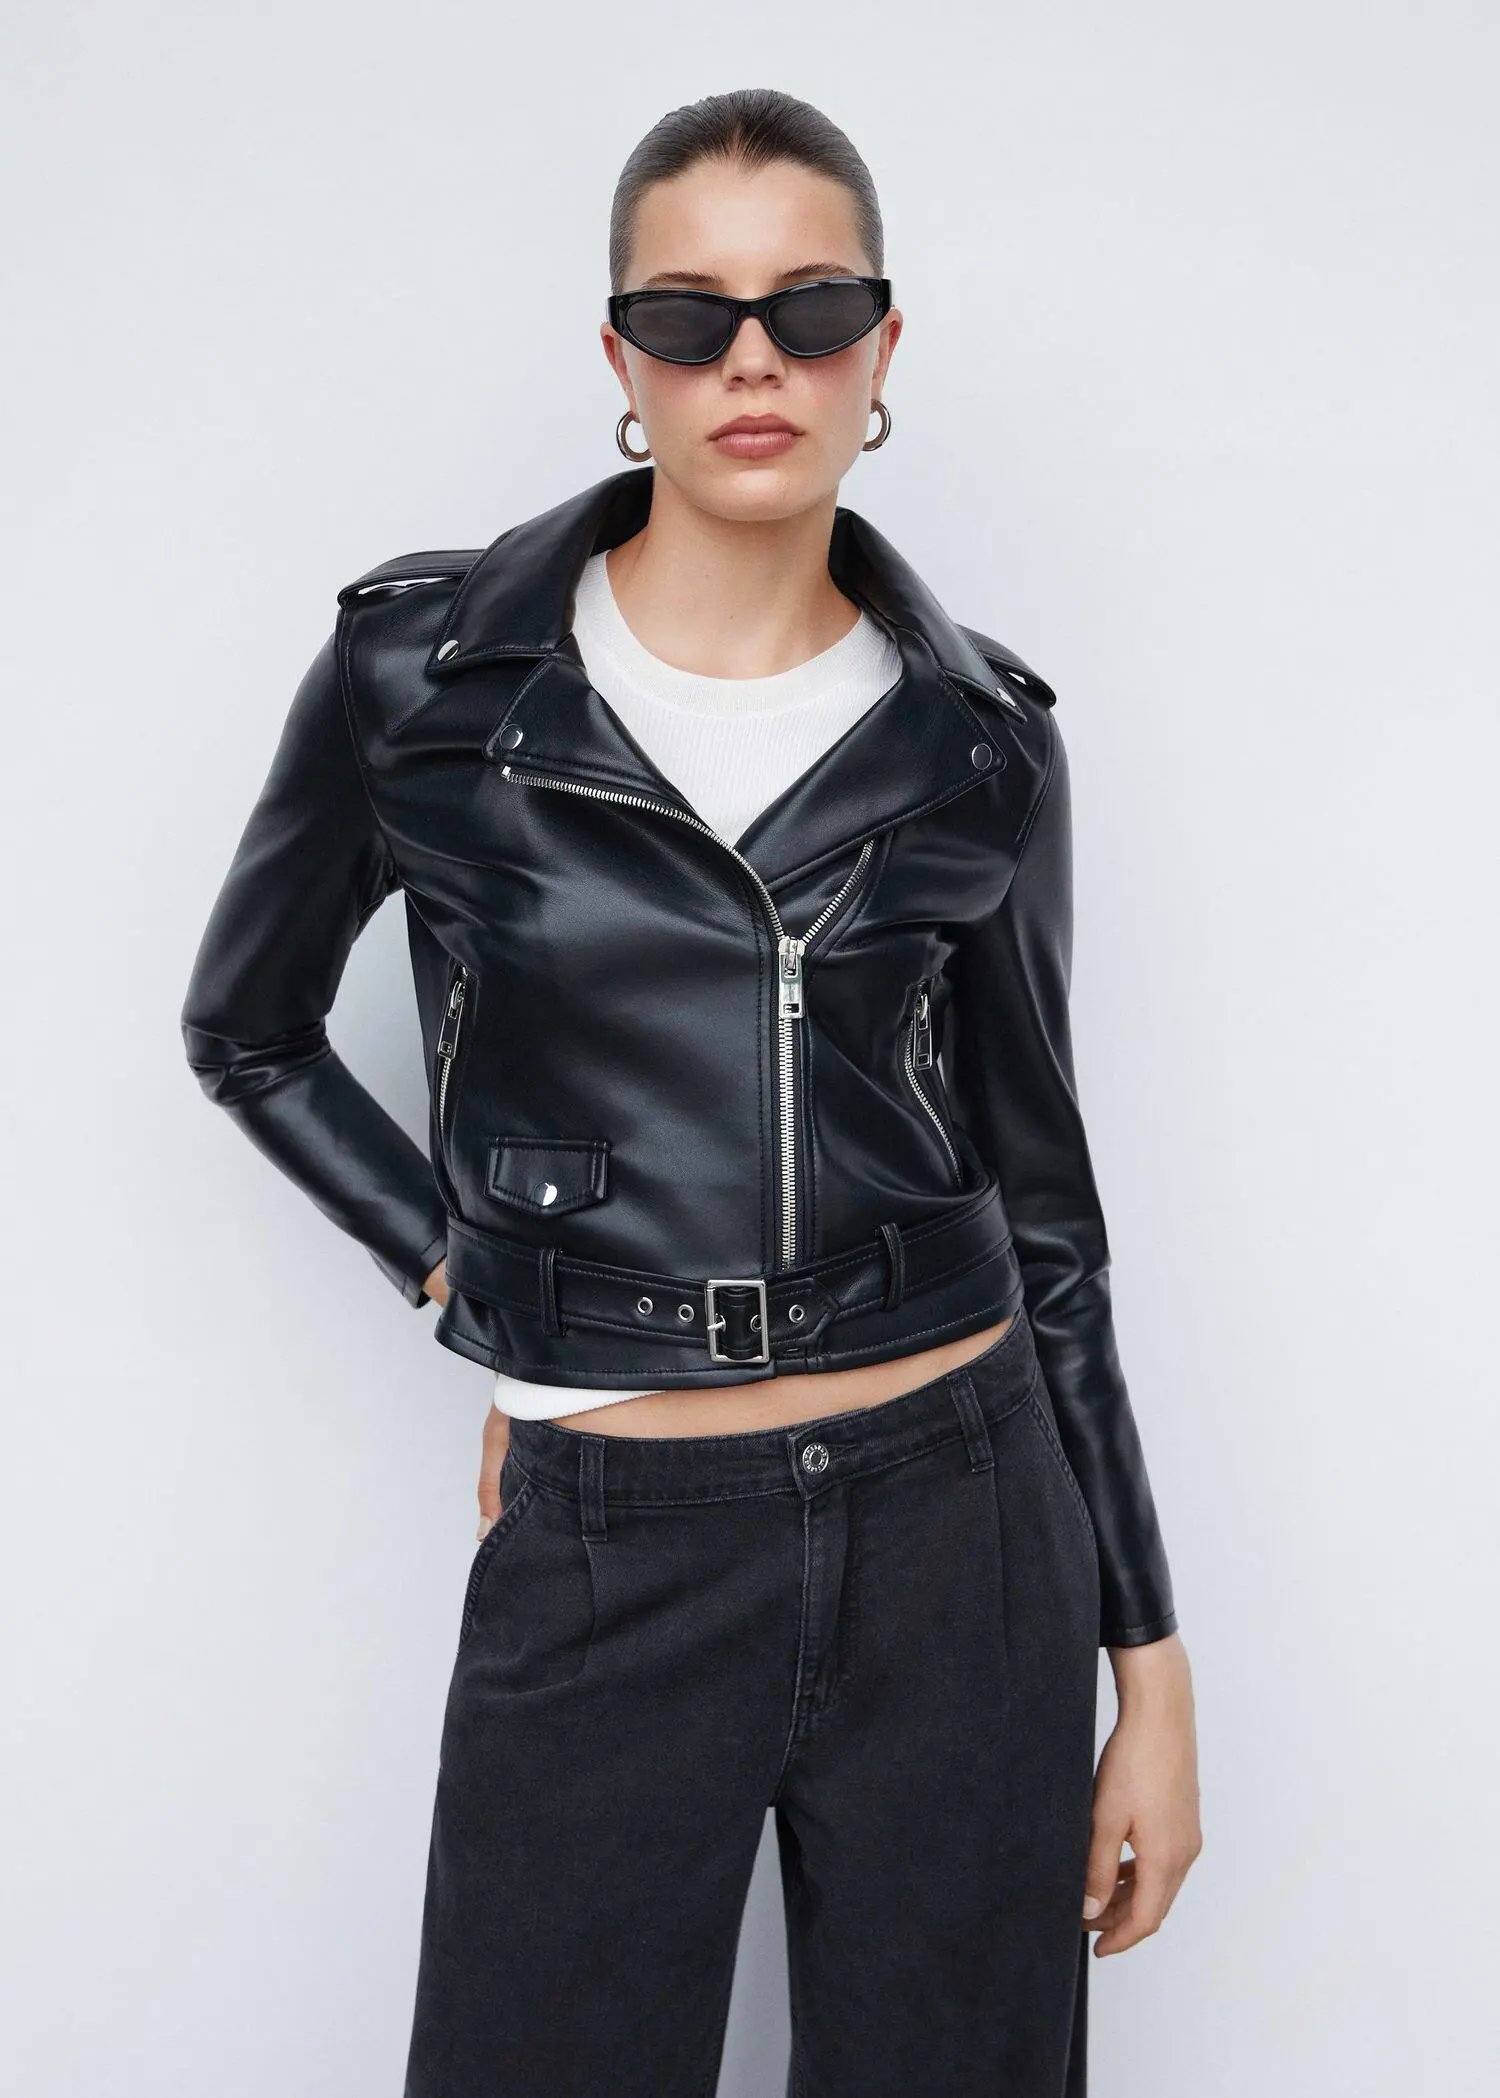 Mango Faux-leather biker jacket. a woman wearing a black leather jacket and sunglasses. 